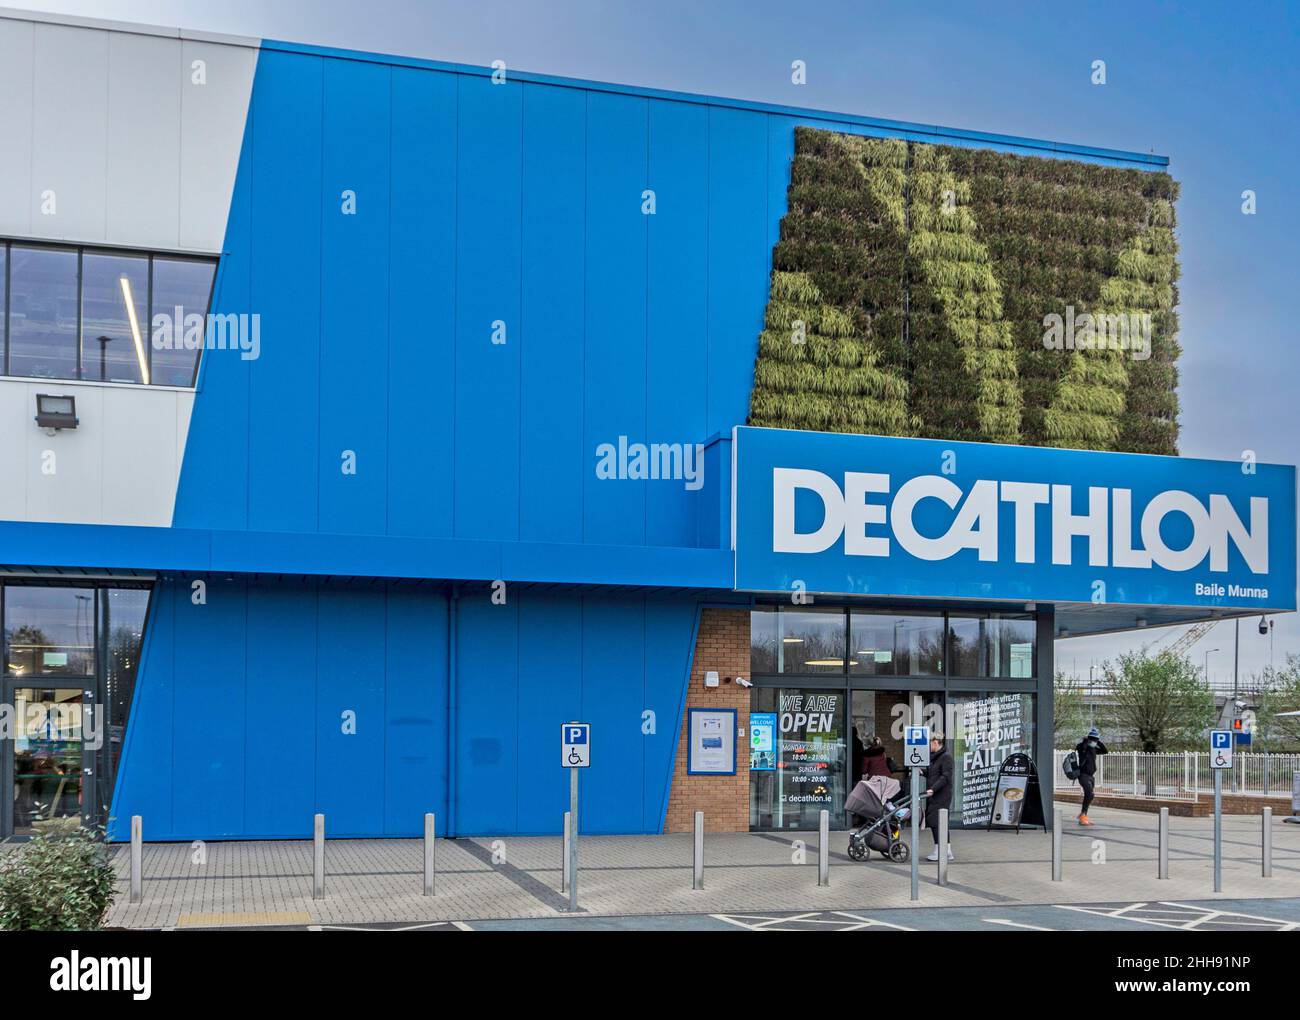 A branch of Decathlon, the French sports retailer, in Ballymun, Dublin, Ireland, Stock Photo